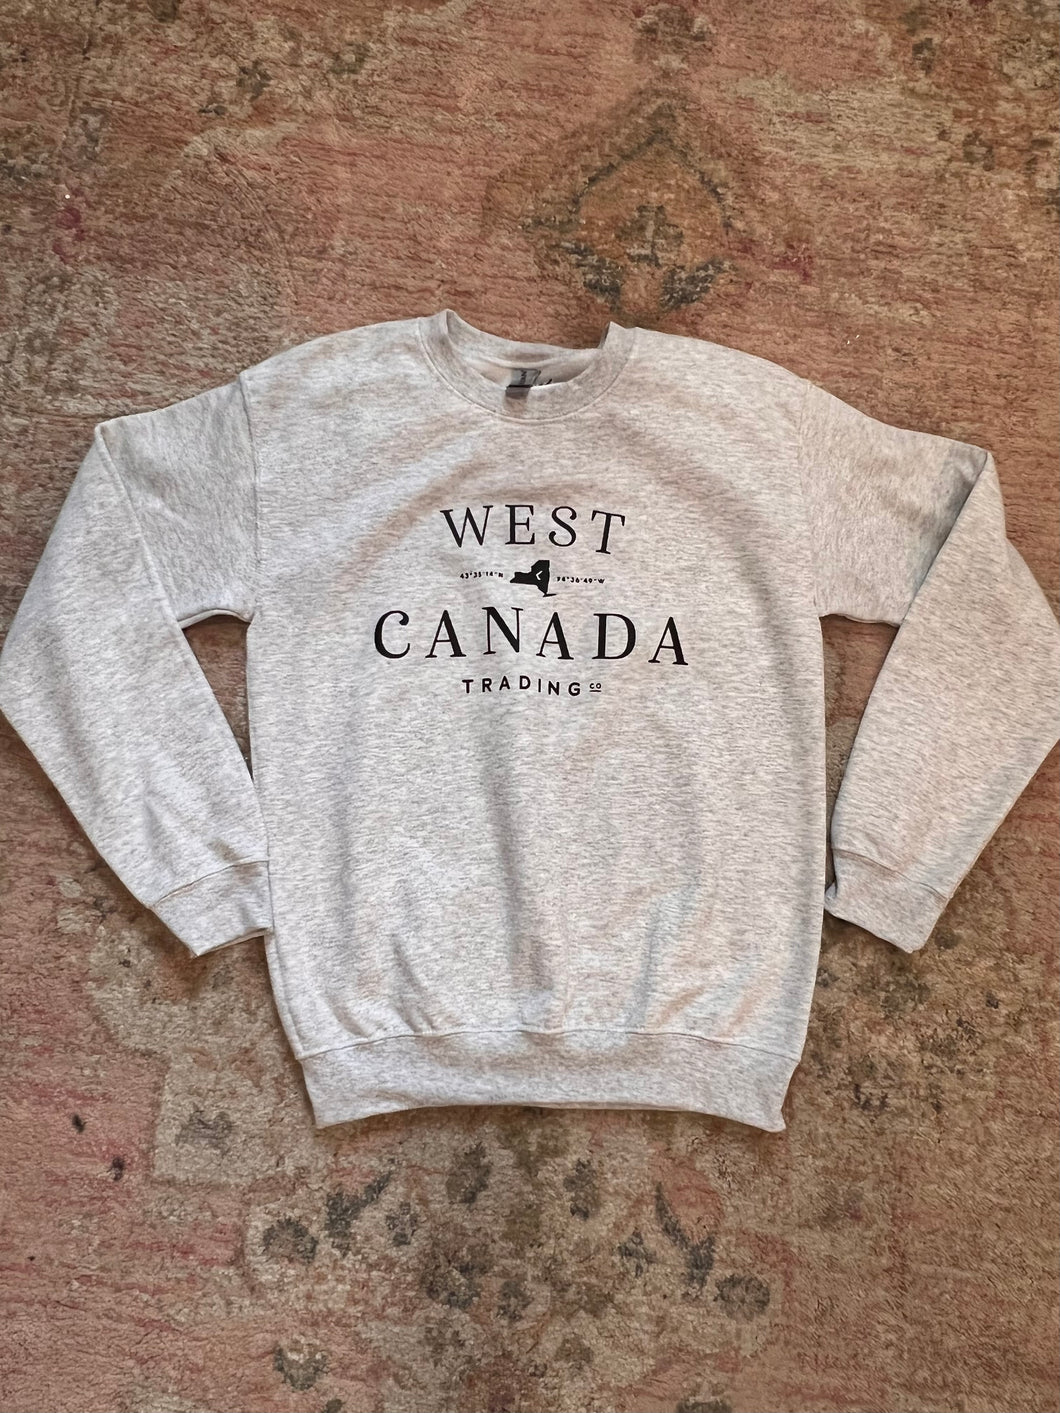 West Canada Trading Co Sweatshirt